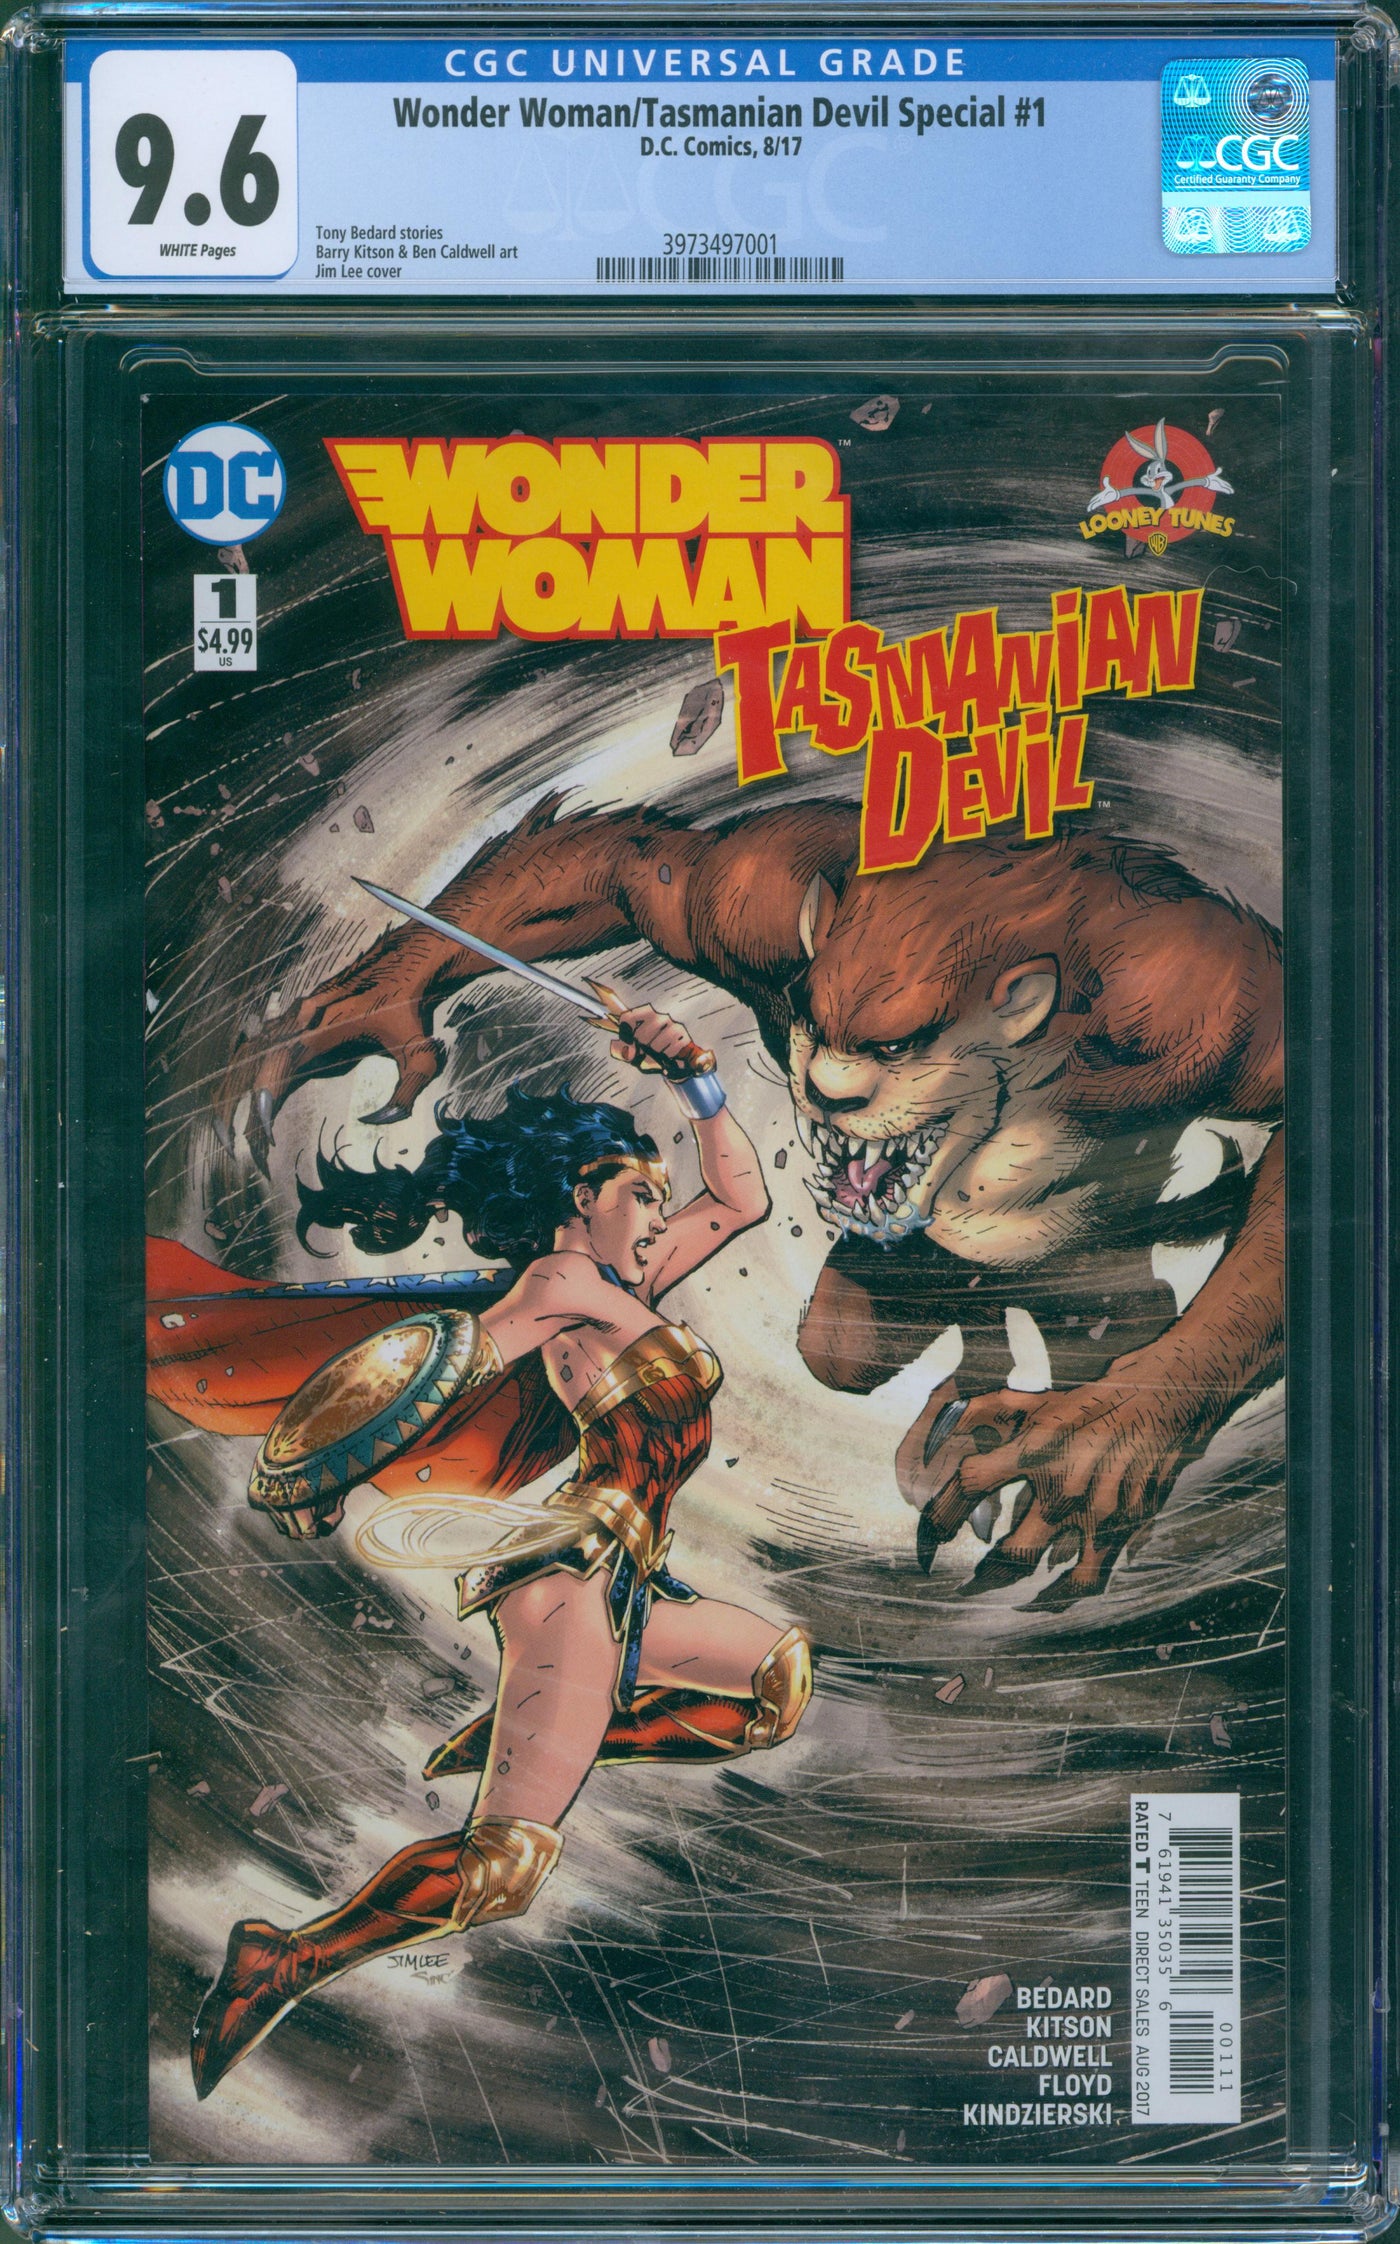 Wonder Woman/Tasmanian Devil Special #1 CGC 9.6